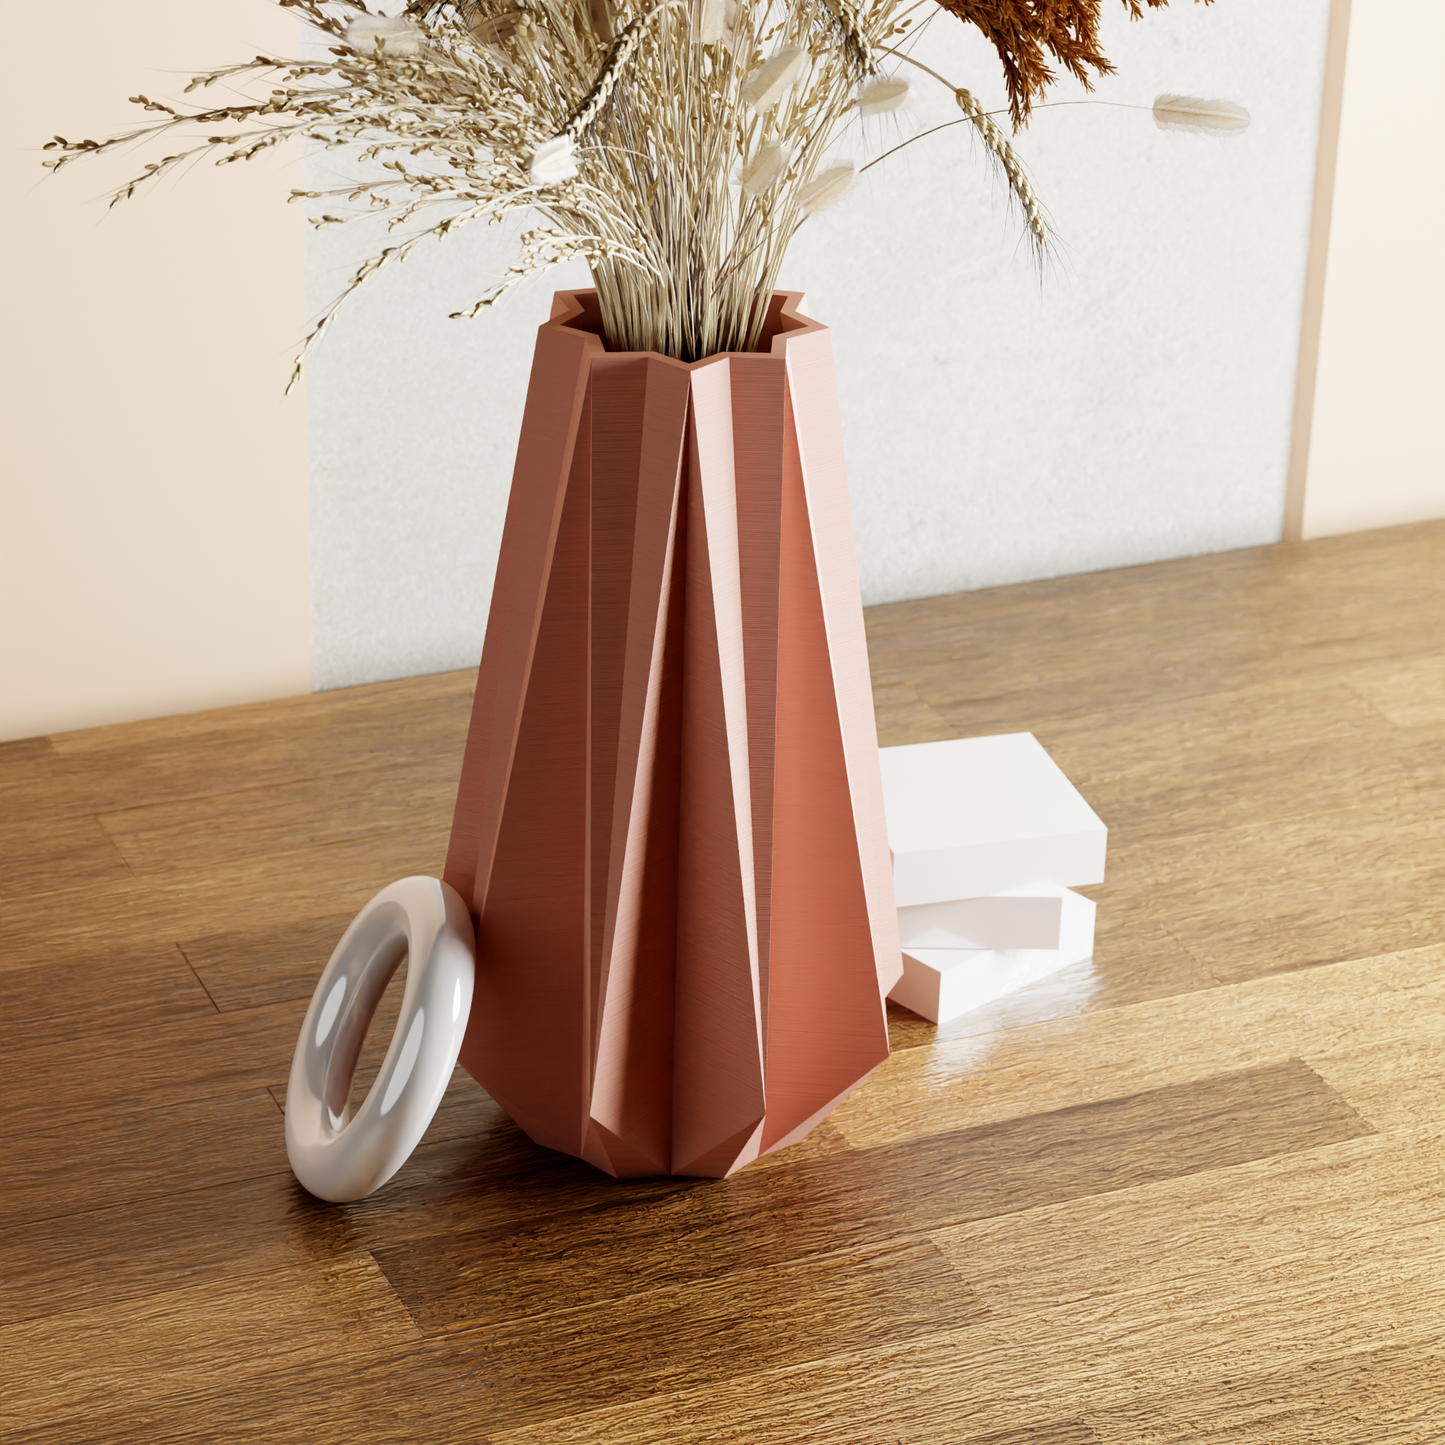 Modernized Pottery - eco-friendly TIMBER Vase  Modernized Pottery   -better made easy-eco-friendly-sustainable-gifting